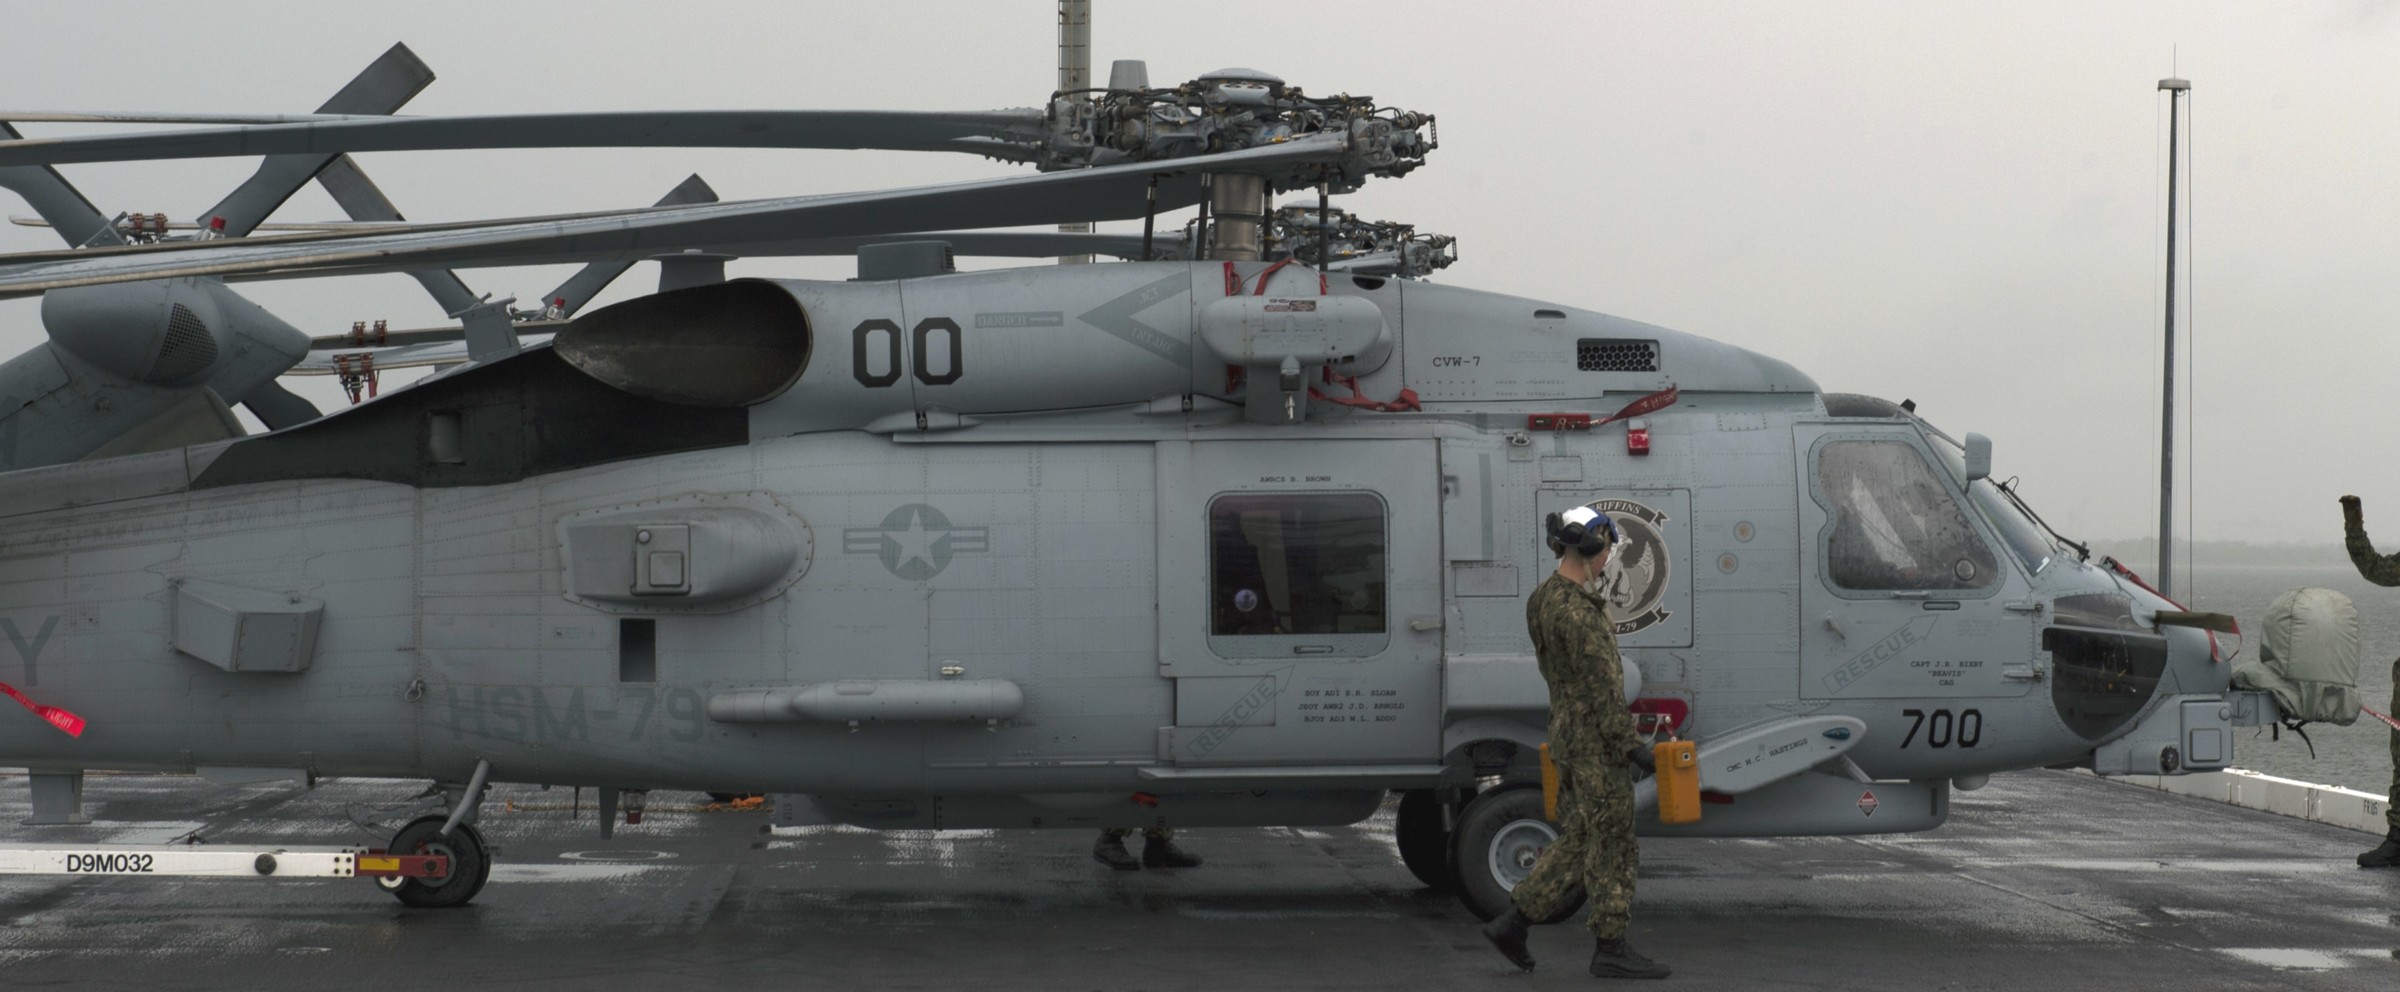 hsm-79 griffins helicopter maritime strike squadron mh-60r seahawk cvw-7 cvn-72 uss abraham lincoln 2018 15